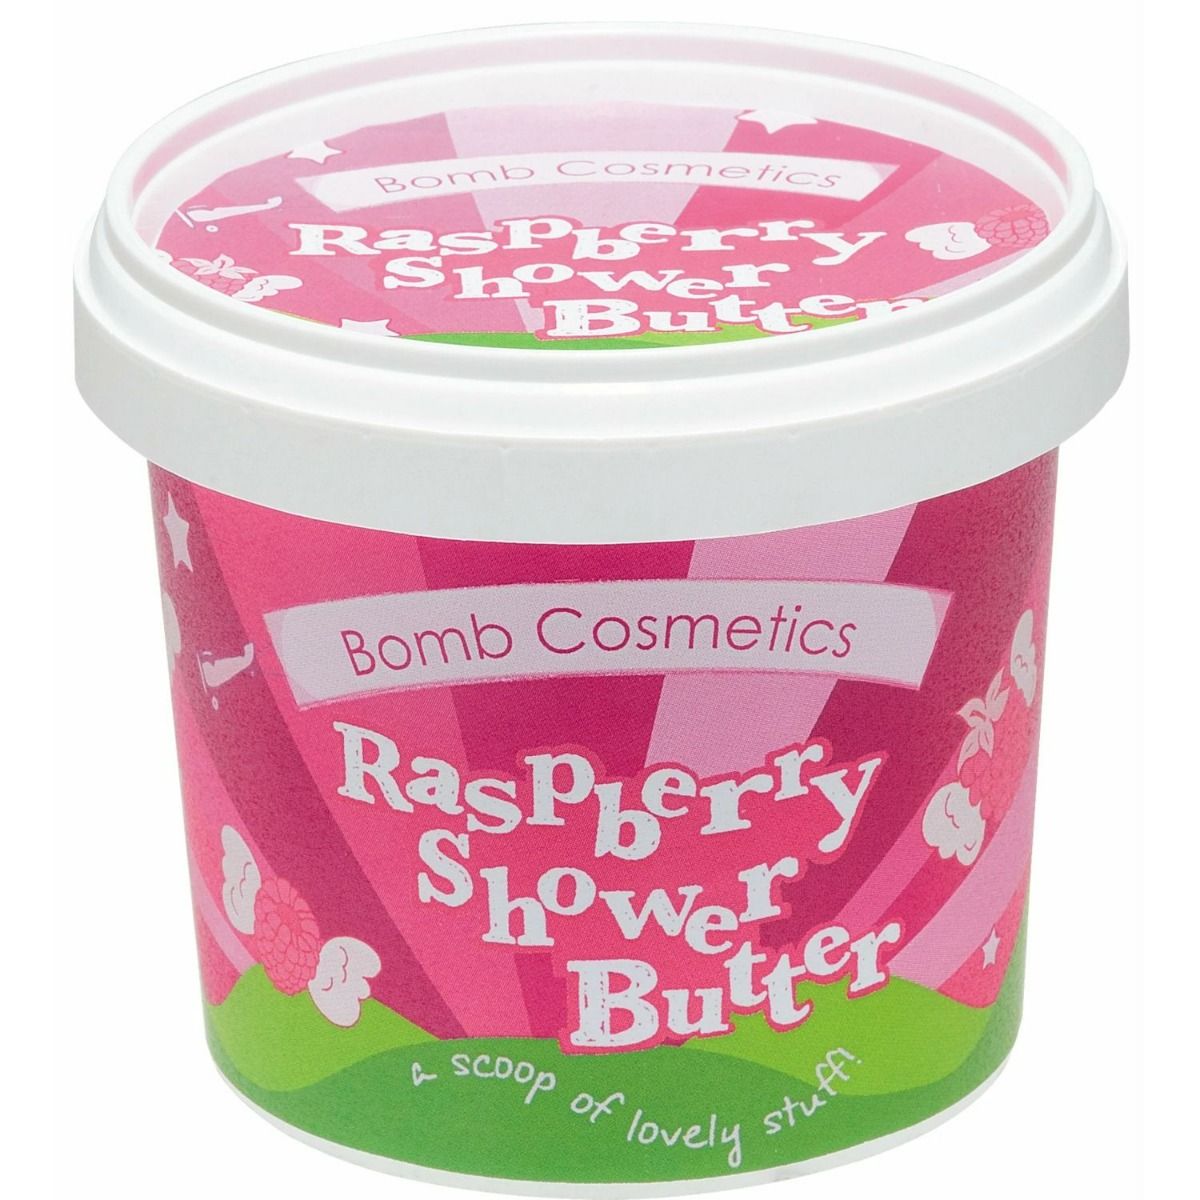 Bomb Cosmetics Raspberry очищающее масло для тела, 1 шт. цена и фото